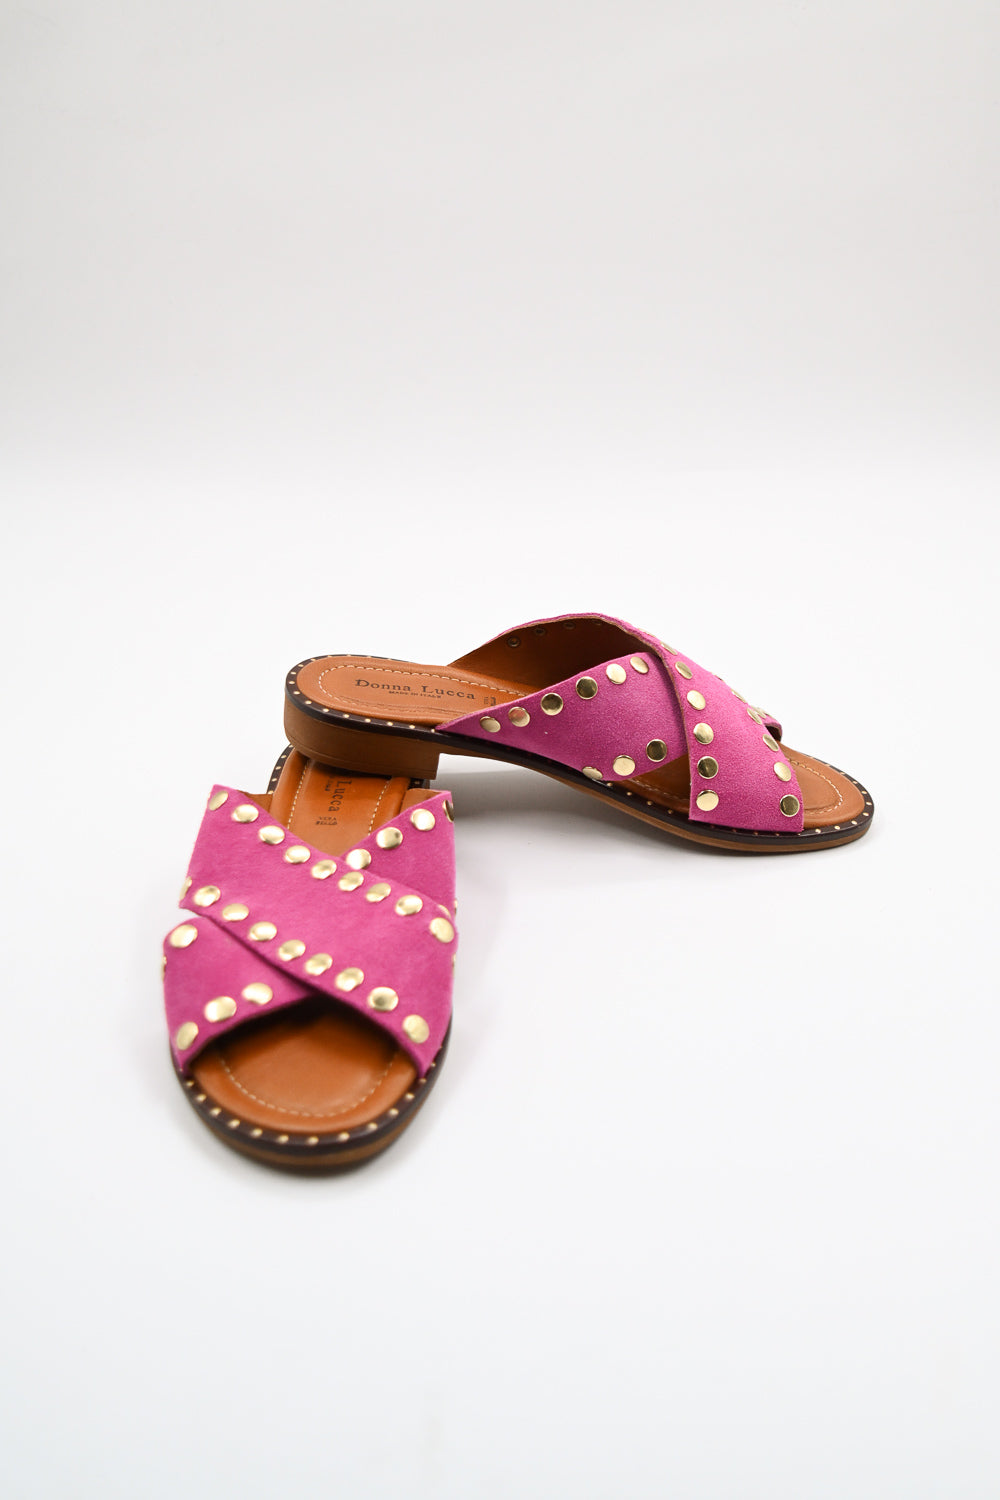 emporio italia donna luca slide sandal fuscia pinkk leather gold studs